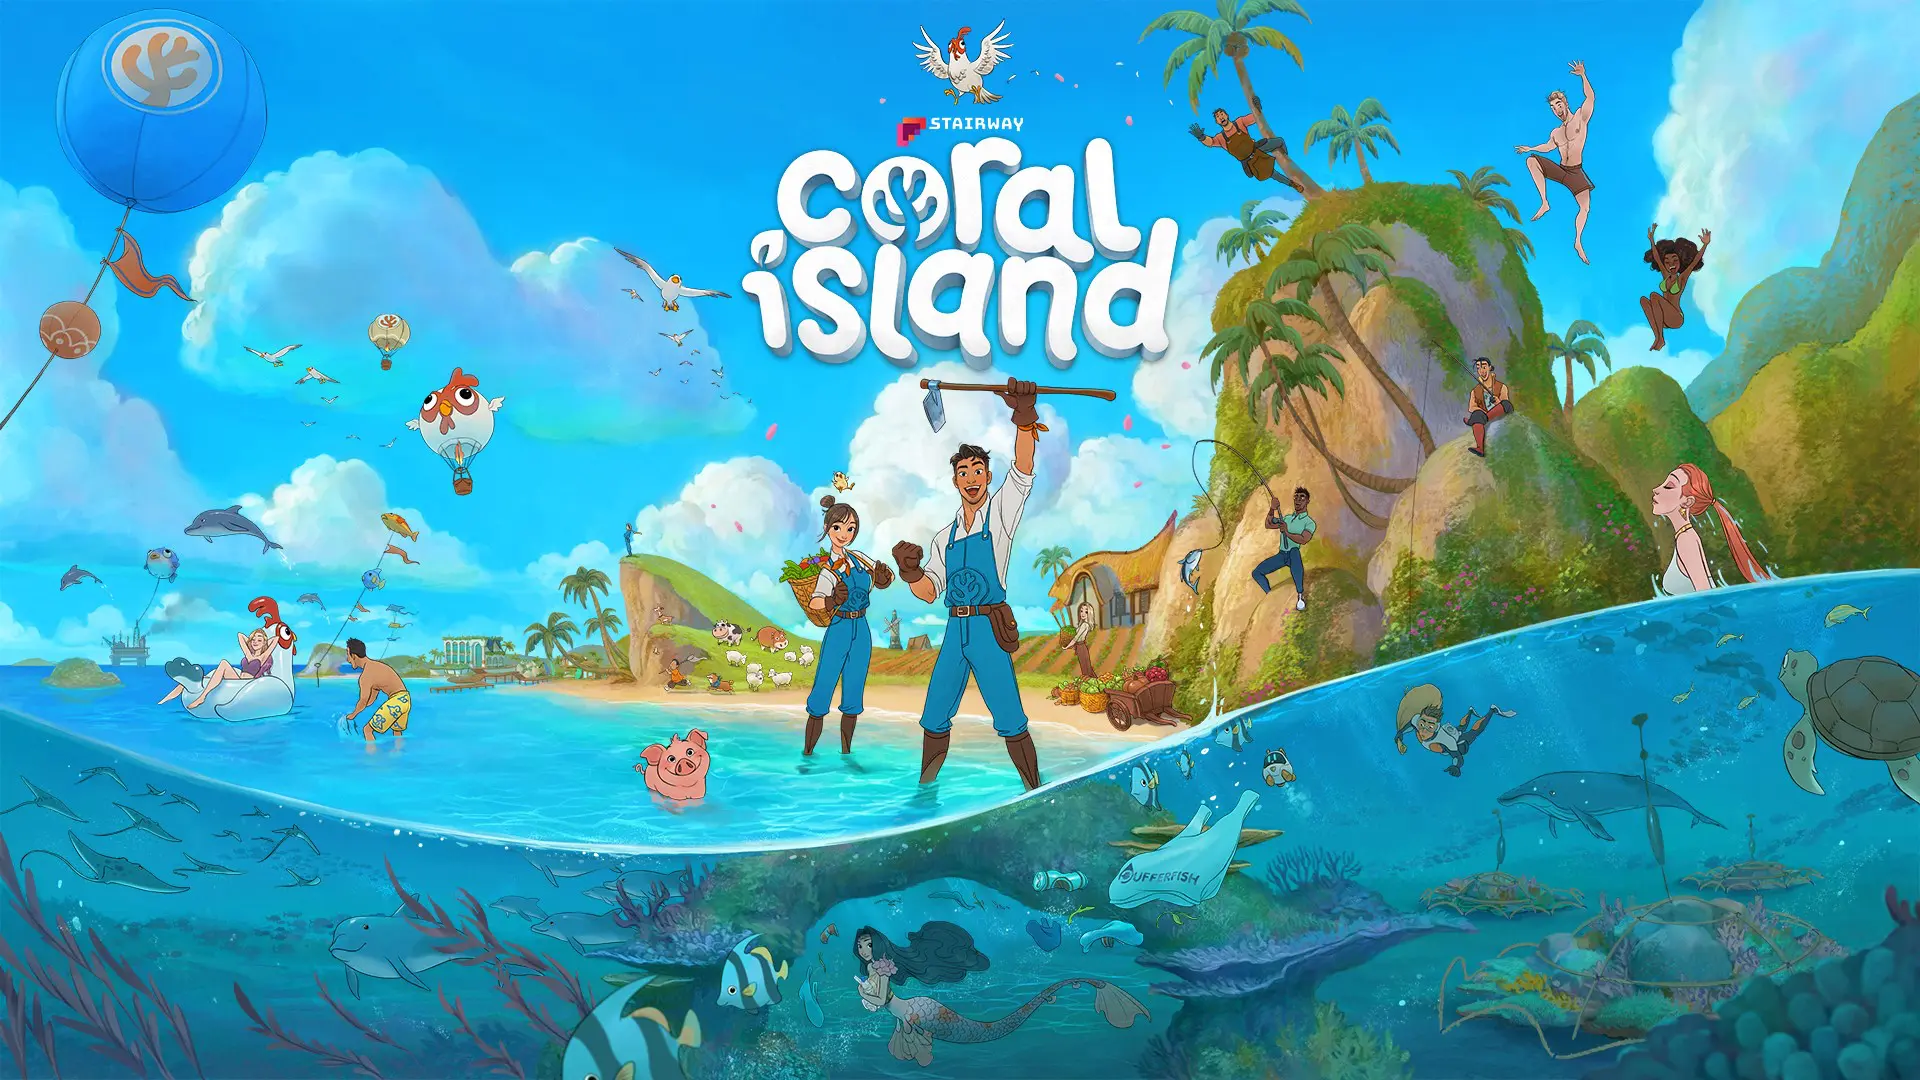 Coral island raj